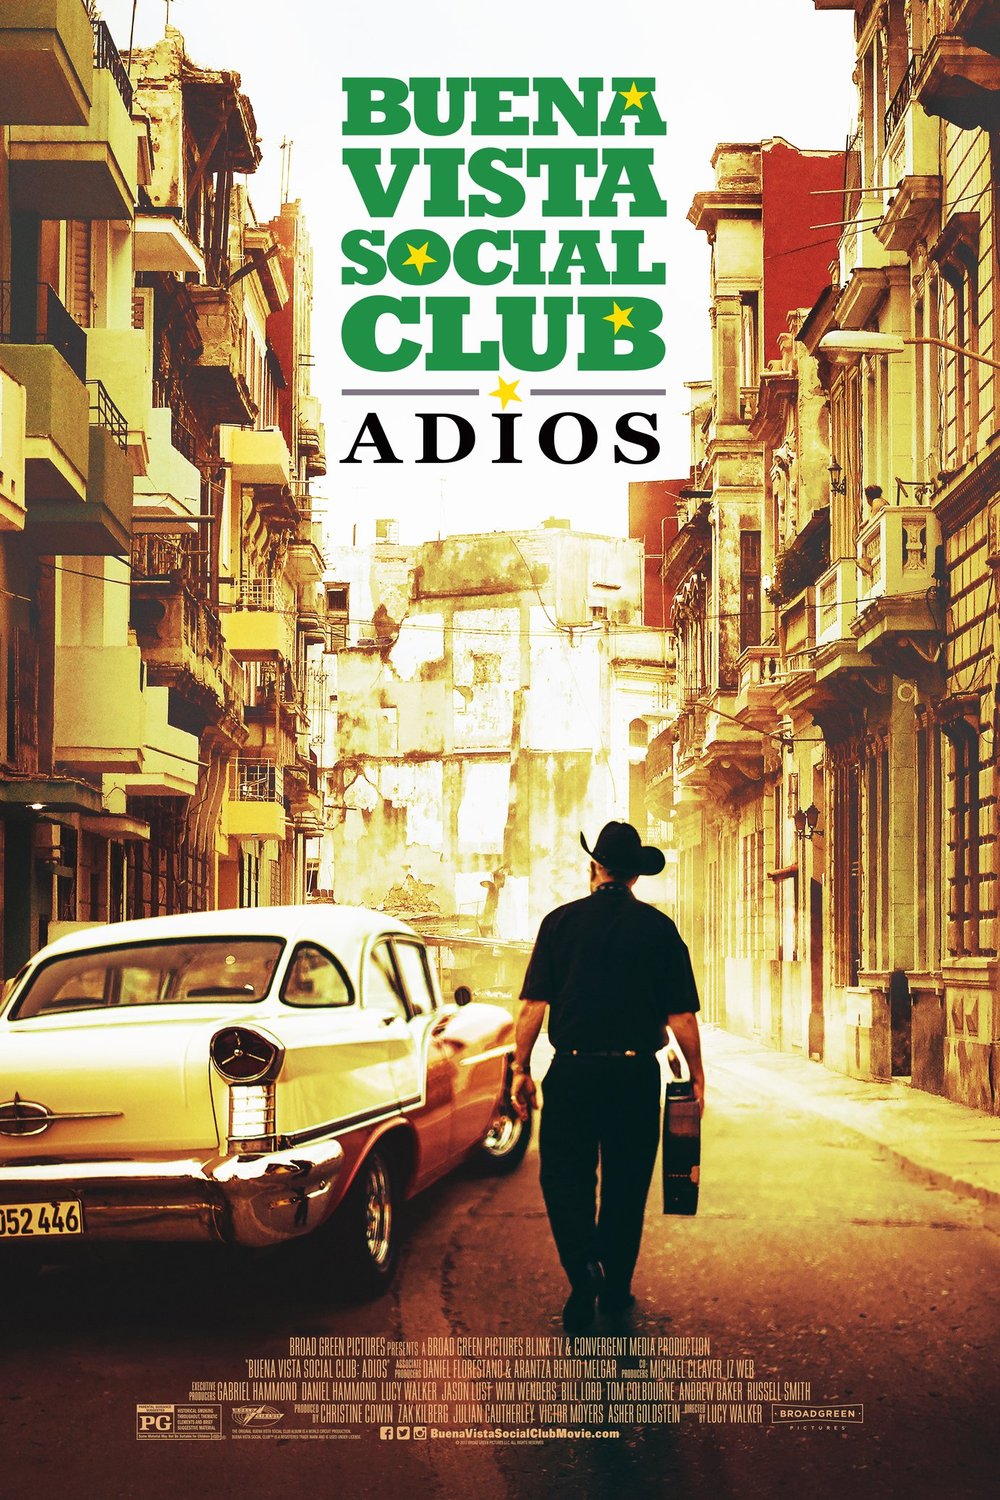 L'affiche du film Buena Vista Social Club: Adios